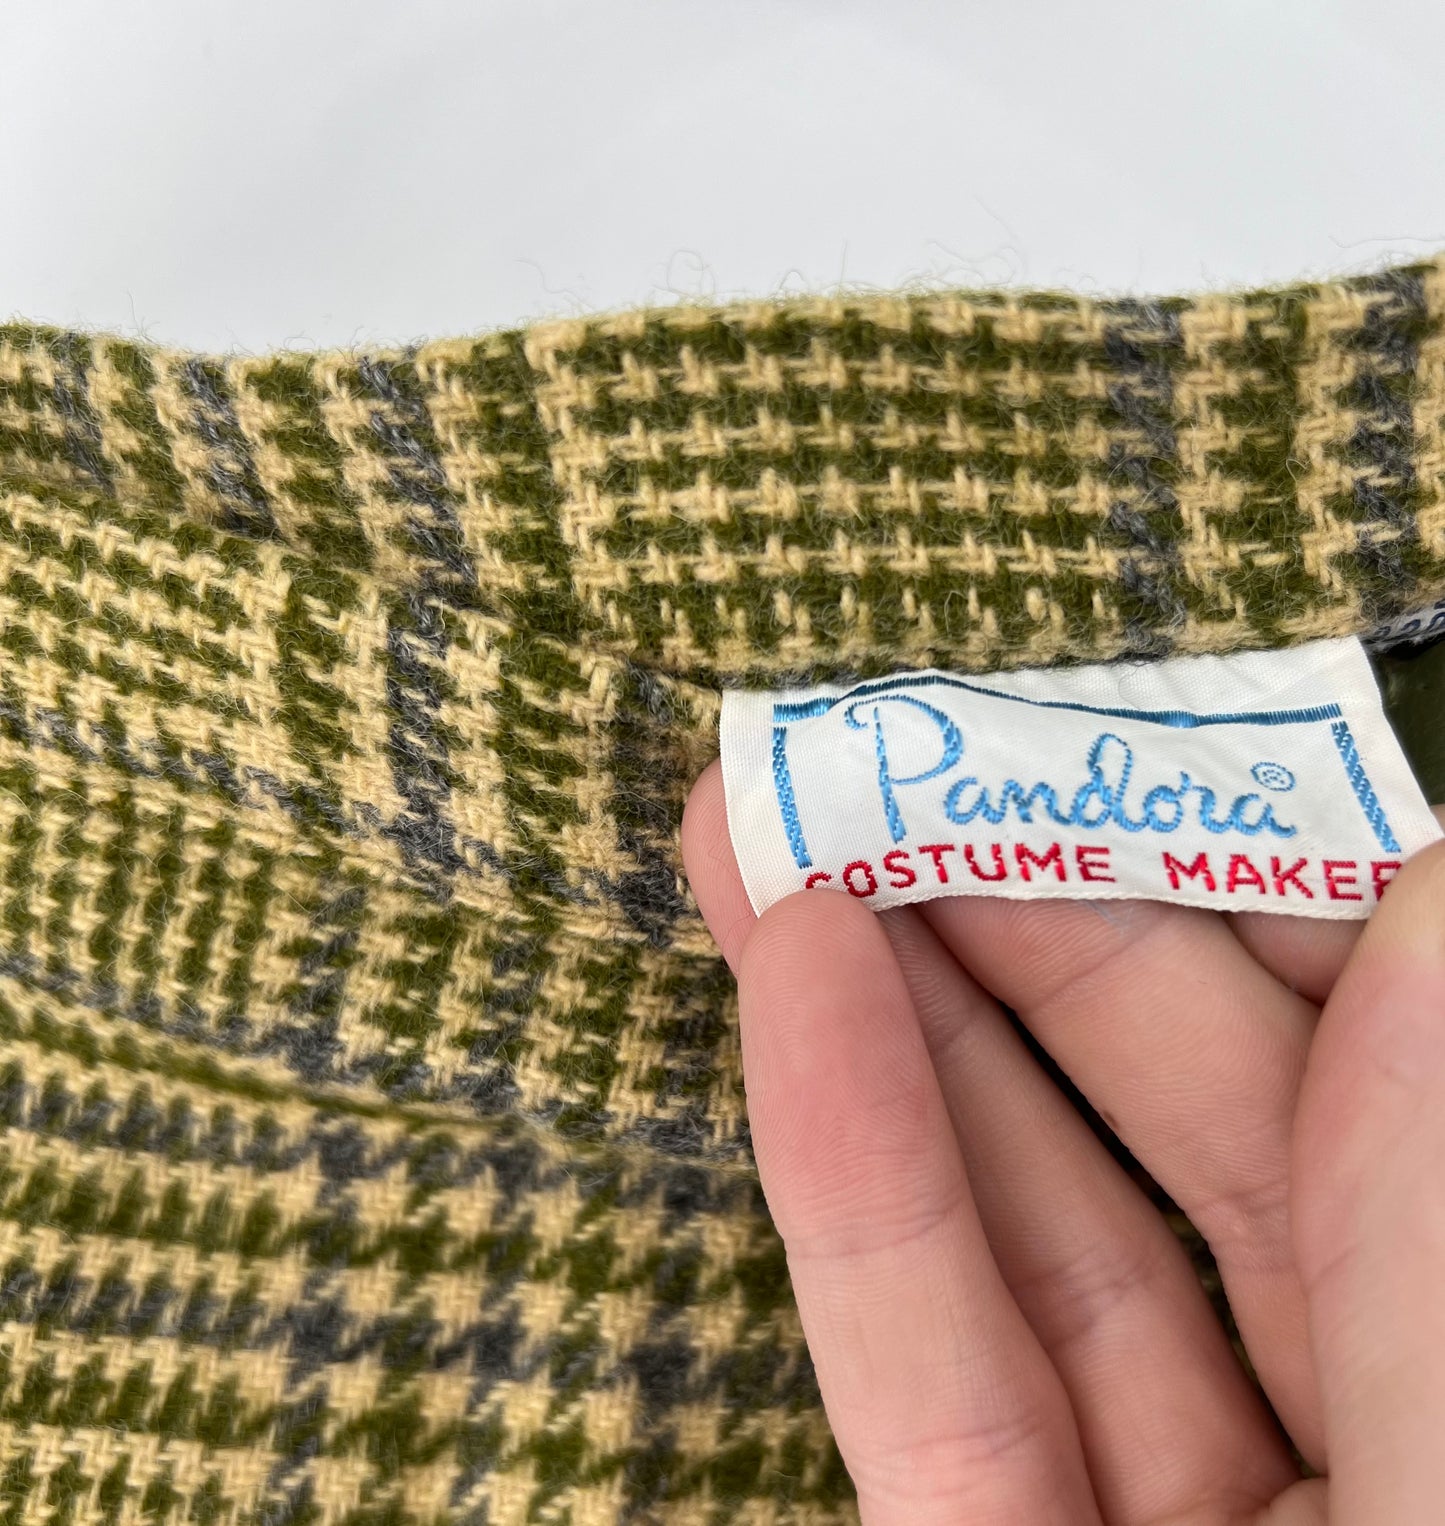 Vintage 70s Costume Designer “Pandora” Wrap-Around Houndstooth Print Pleated Schoolgirl Tweed-like Yellow / Green Skirt - CLUELESS-LIKE SKIRT | Sz: S/M